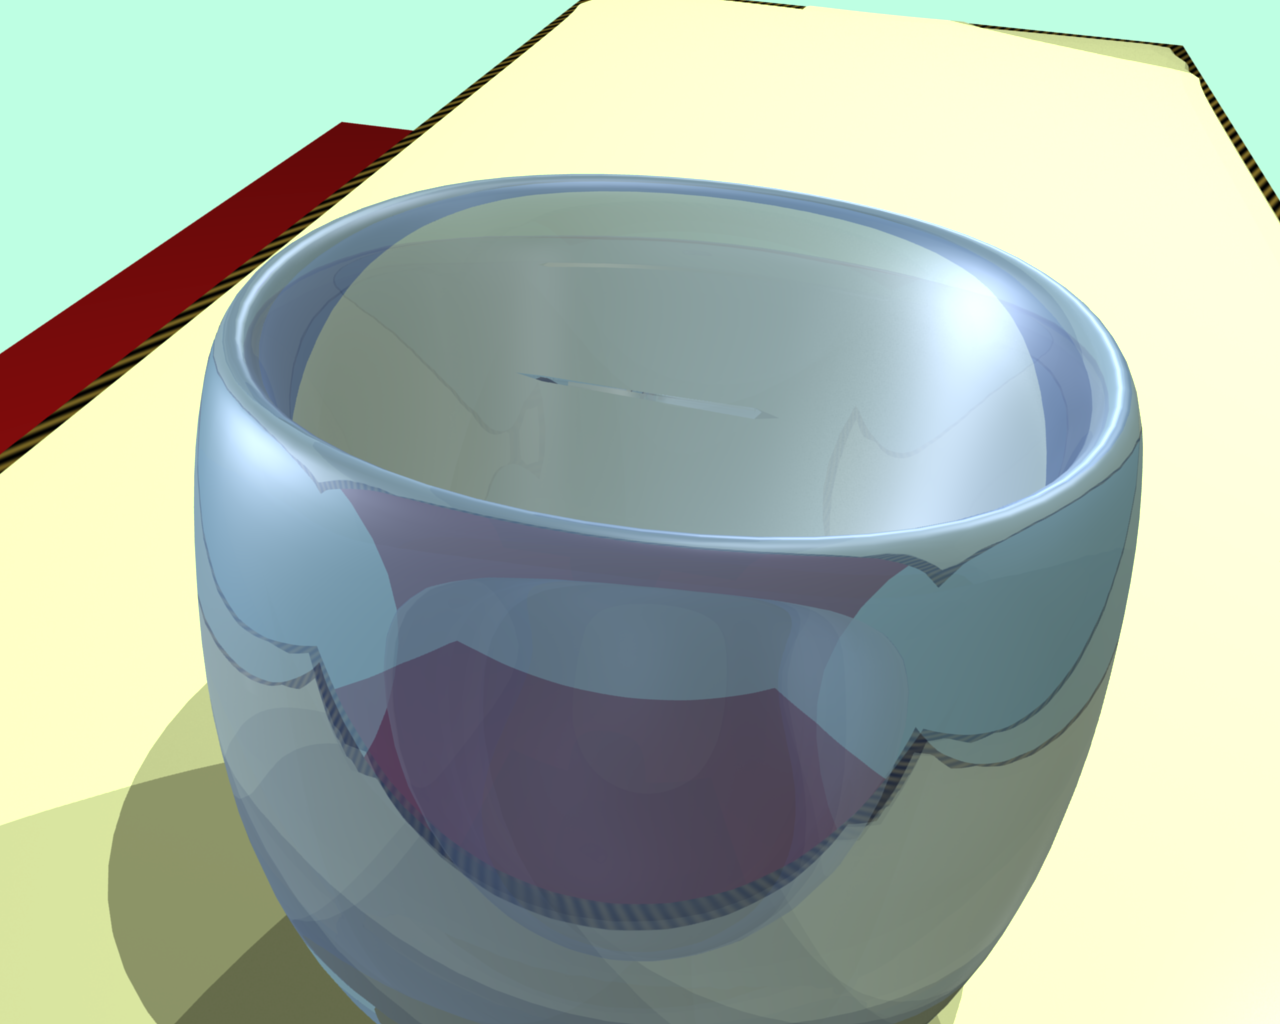 Cup rendered by Blender